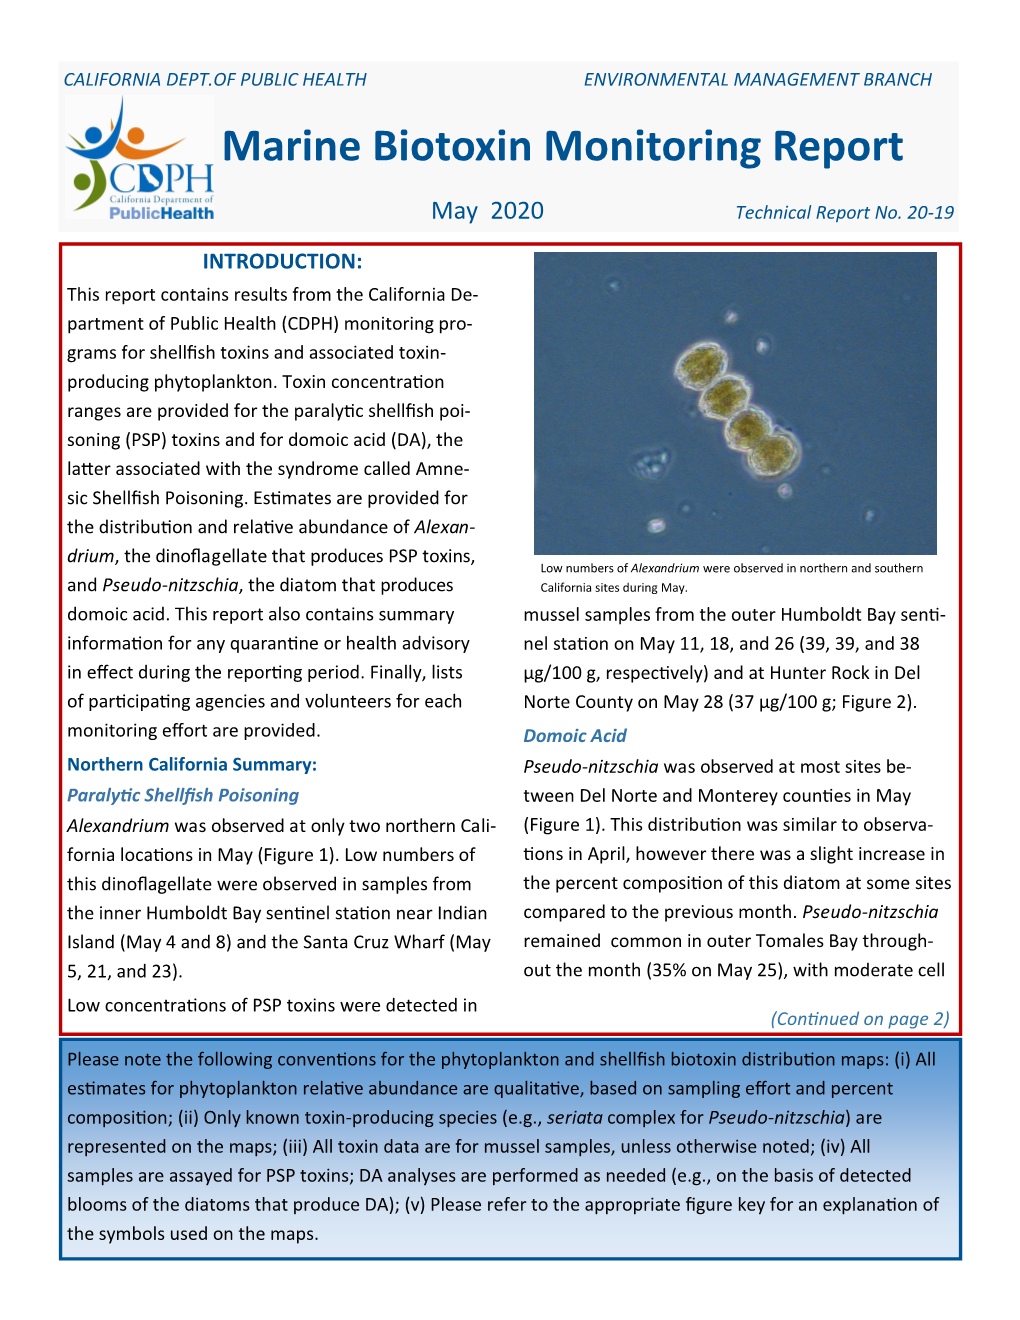 CDPH Marine Biotoxin Monitoring Monthly Report, May 2020